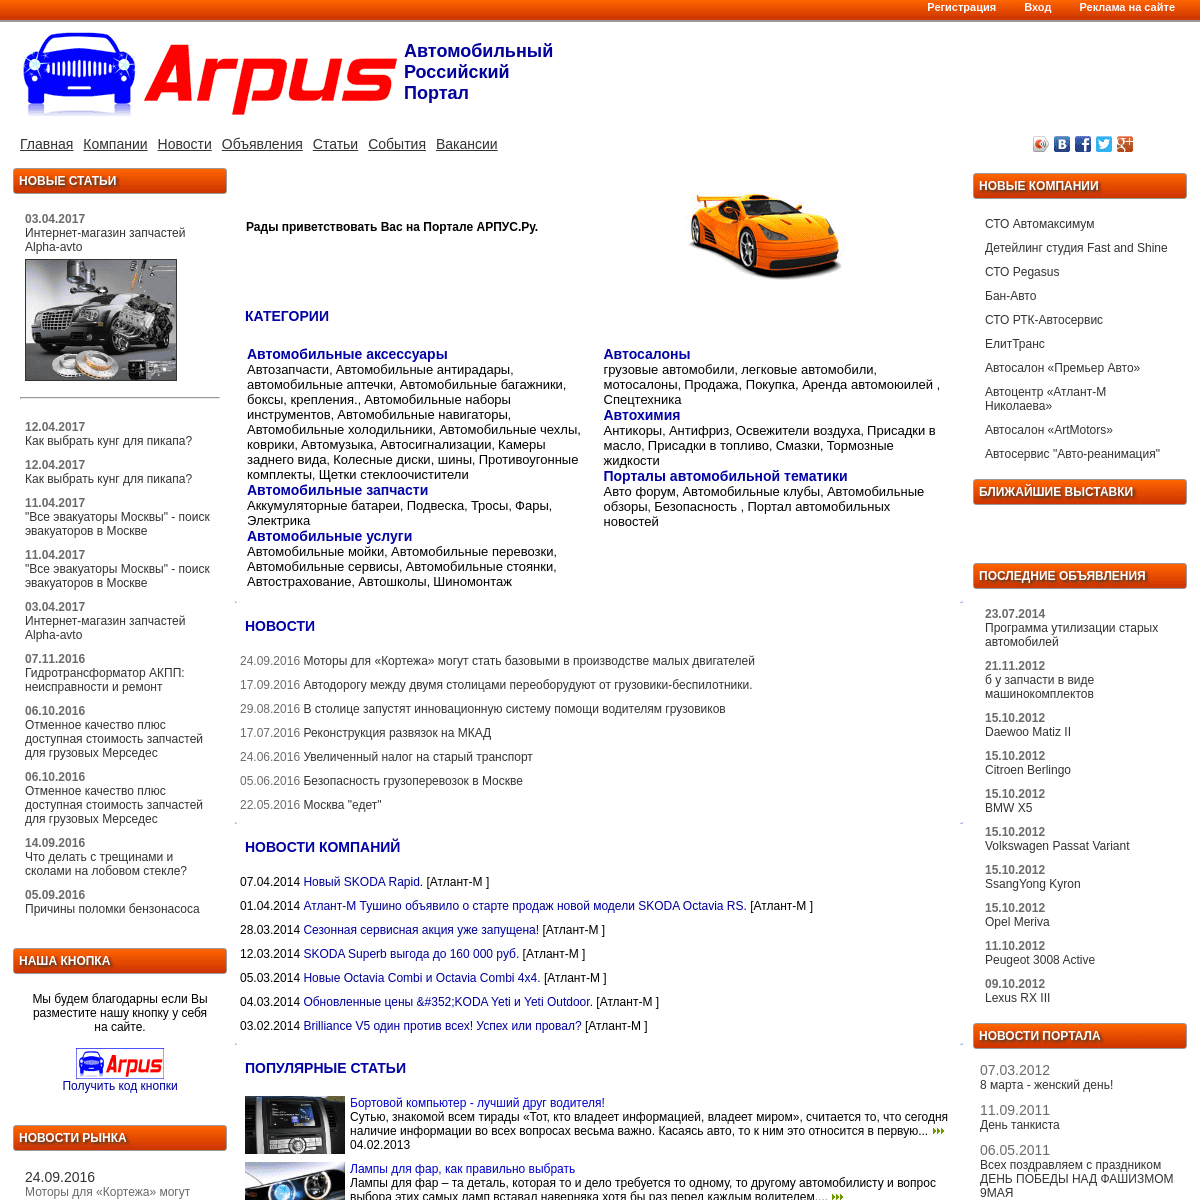 A complete backup of https://arpus.ru